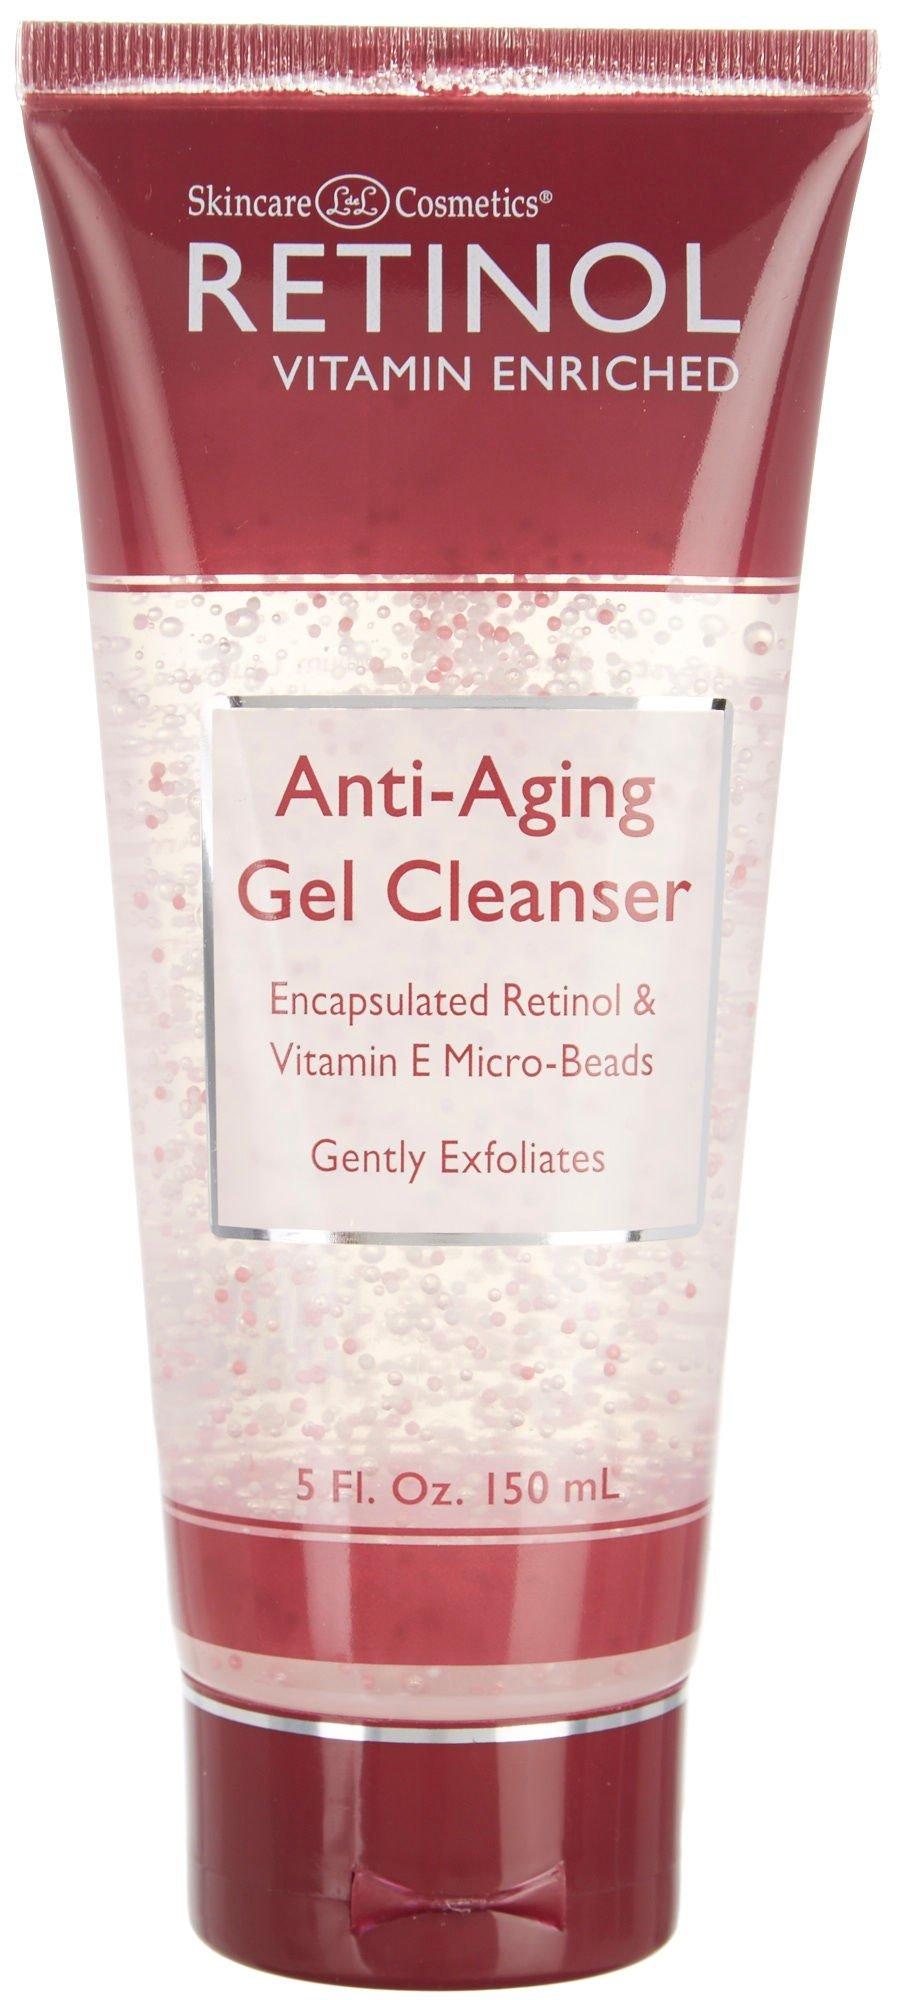 Retinol Vitamin Enriched Anti-Aging Gel Cleanser